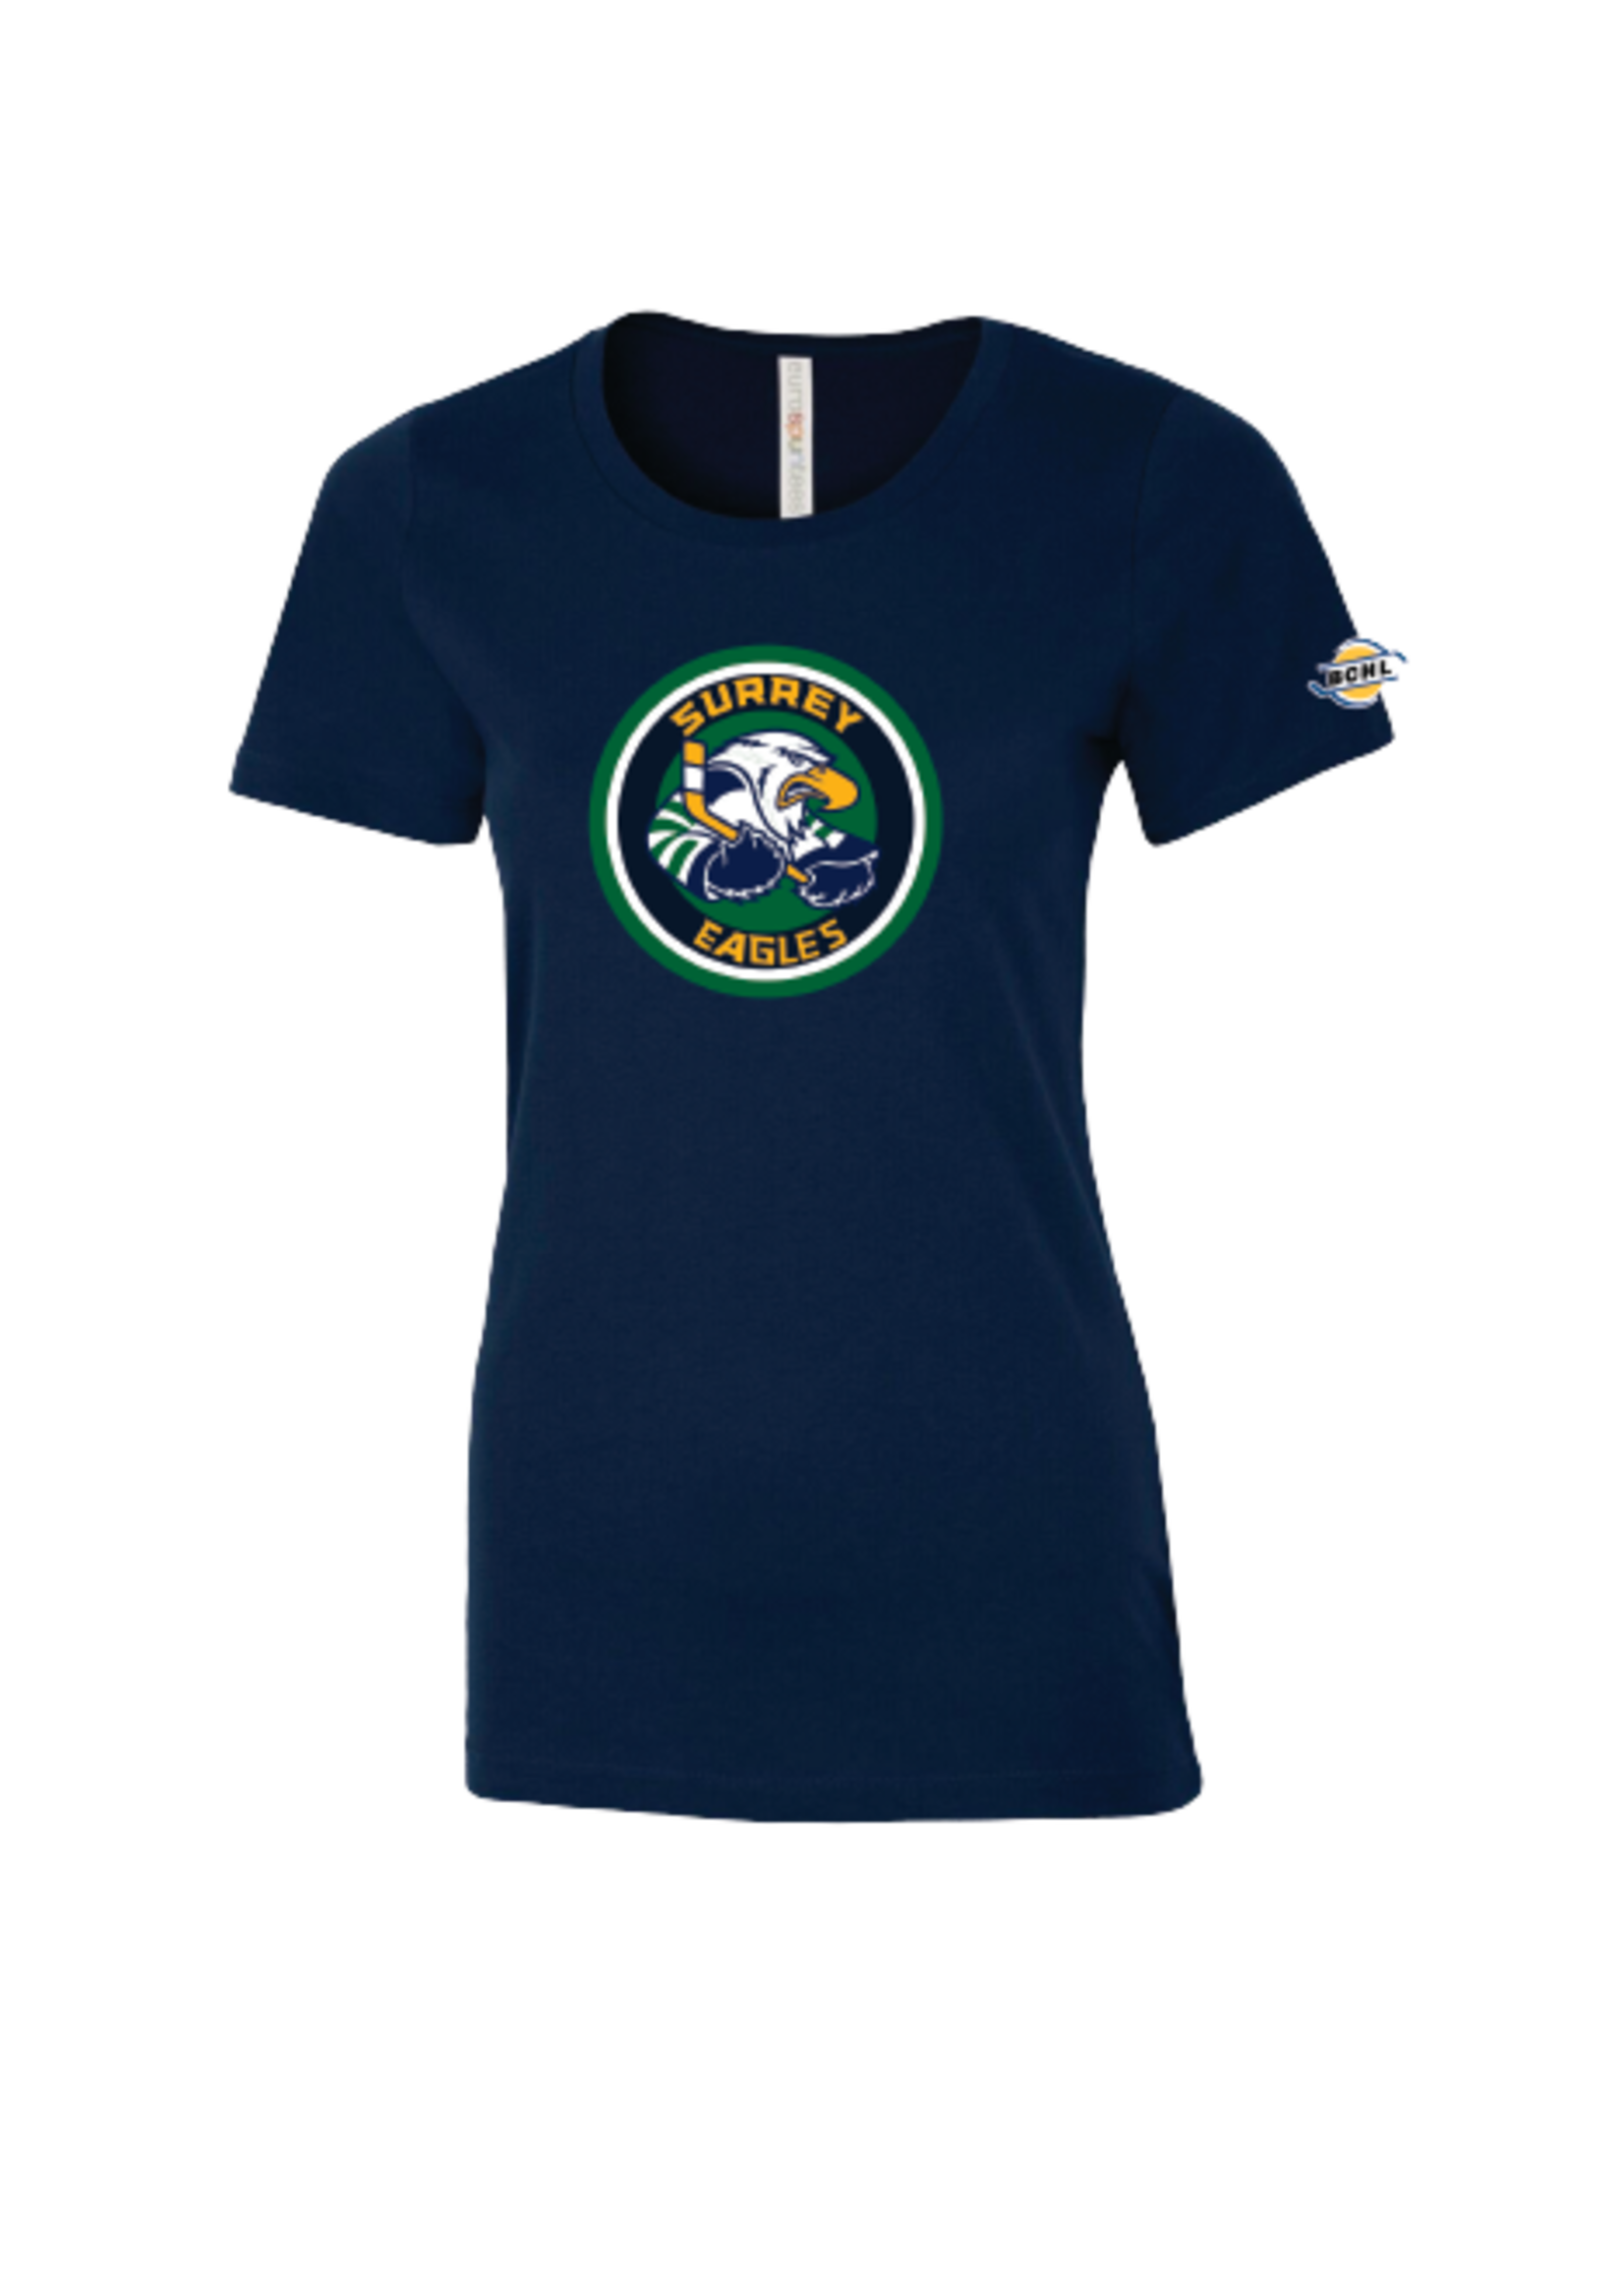 Surrey Eagles Round Logo Ladies T-shirt